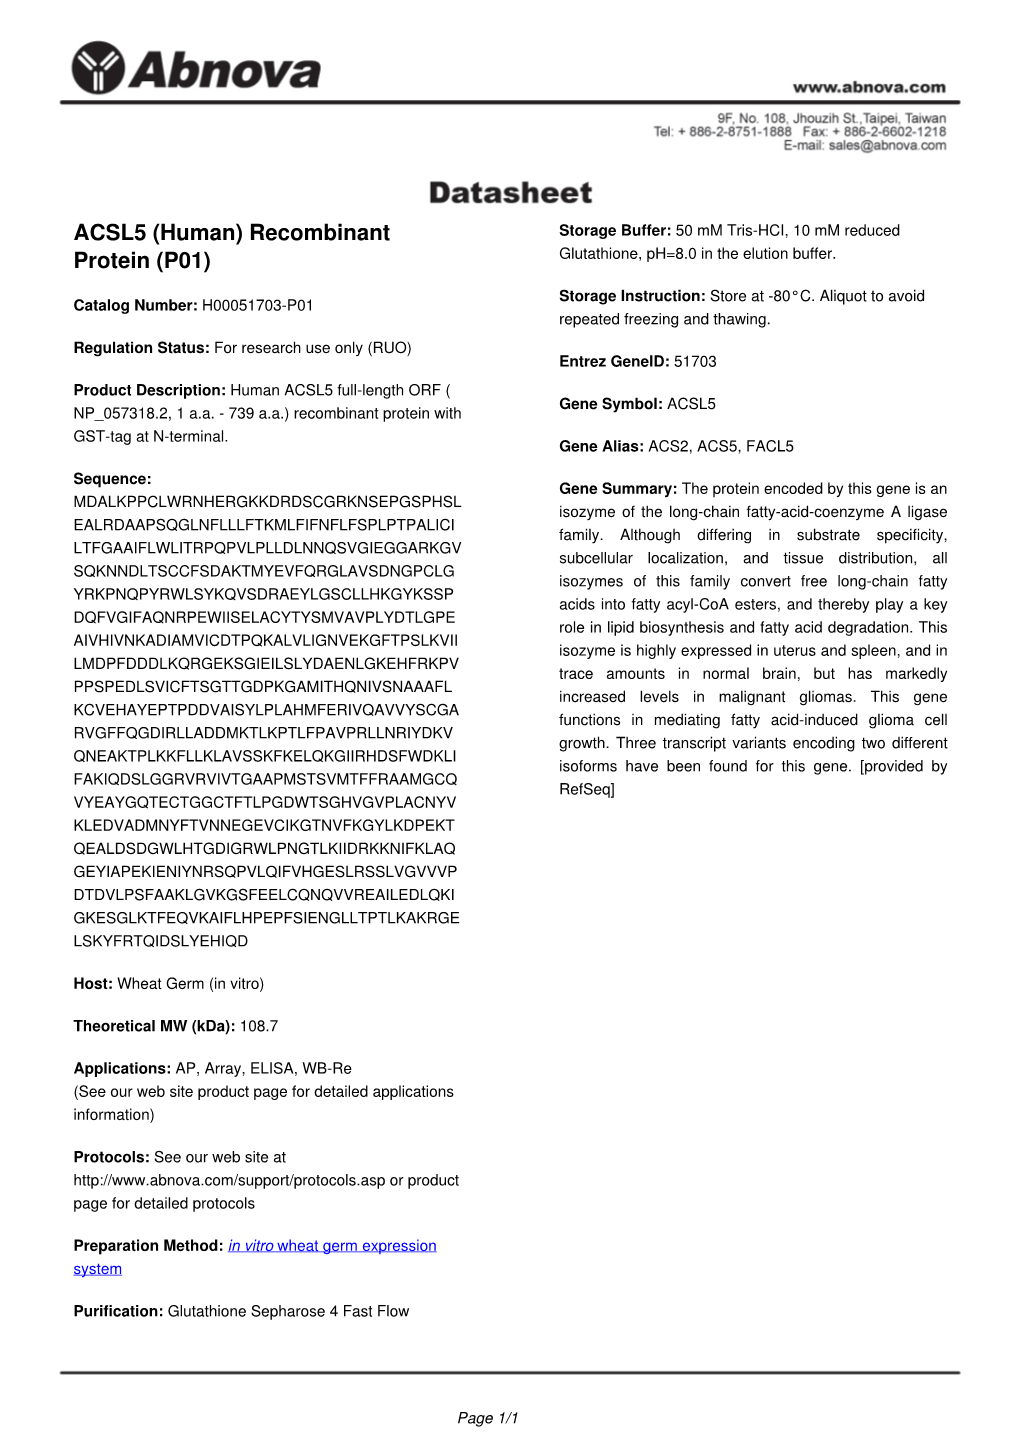 ACSL5 (Human) Recombinant Protein (P01)